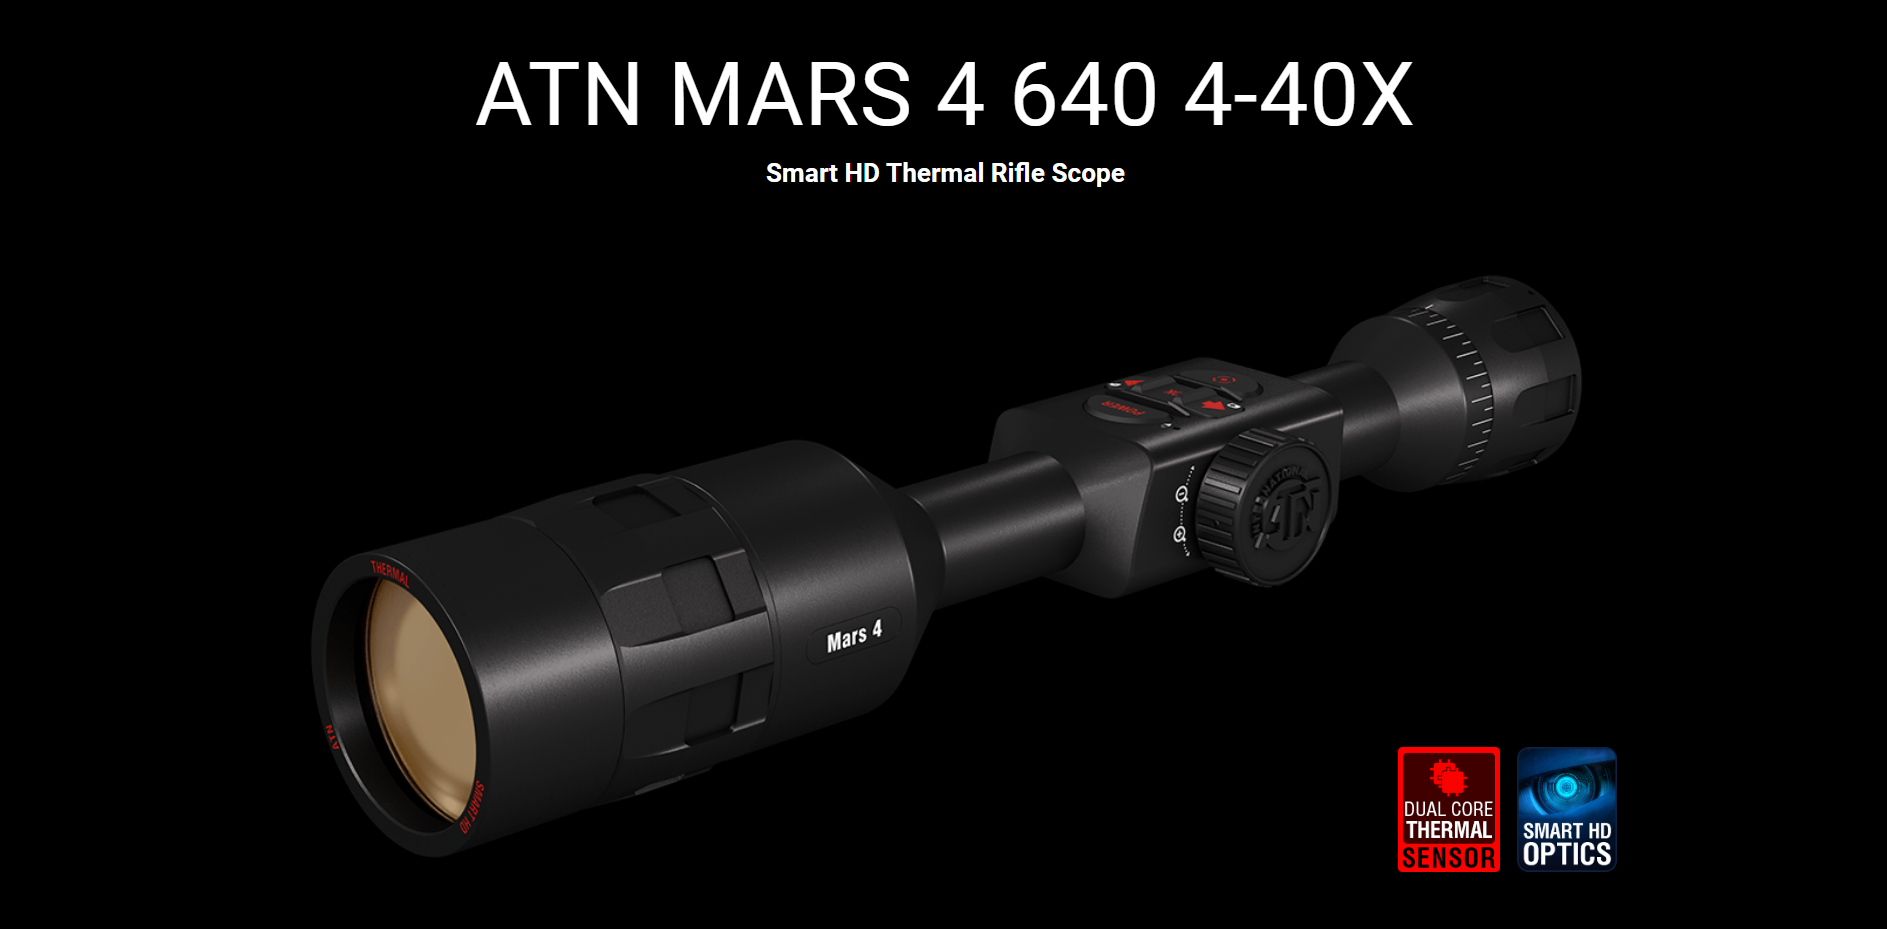 ATN MARS 4-40X SMART THERMAL SCOPE